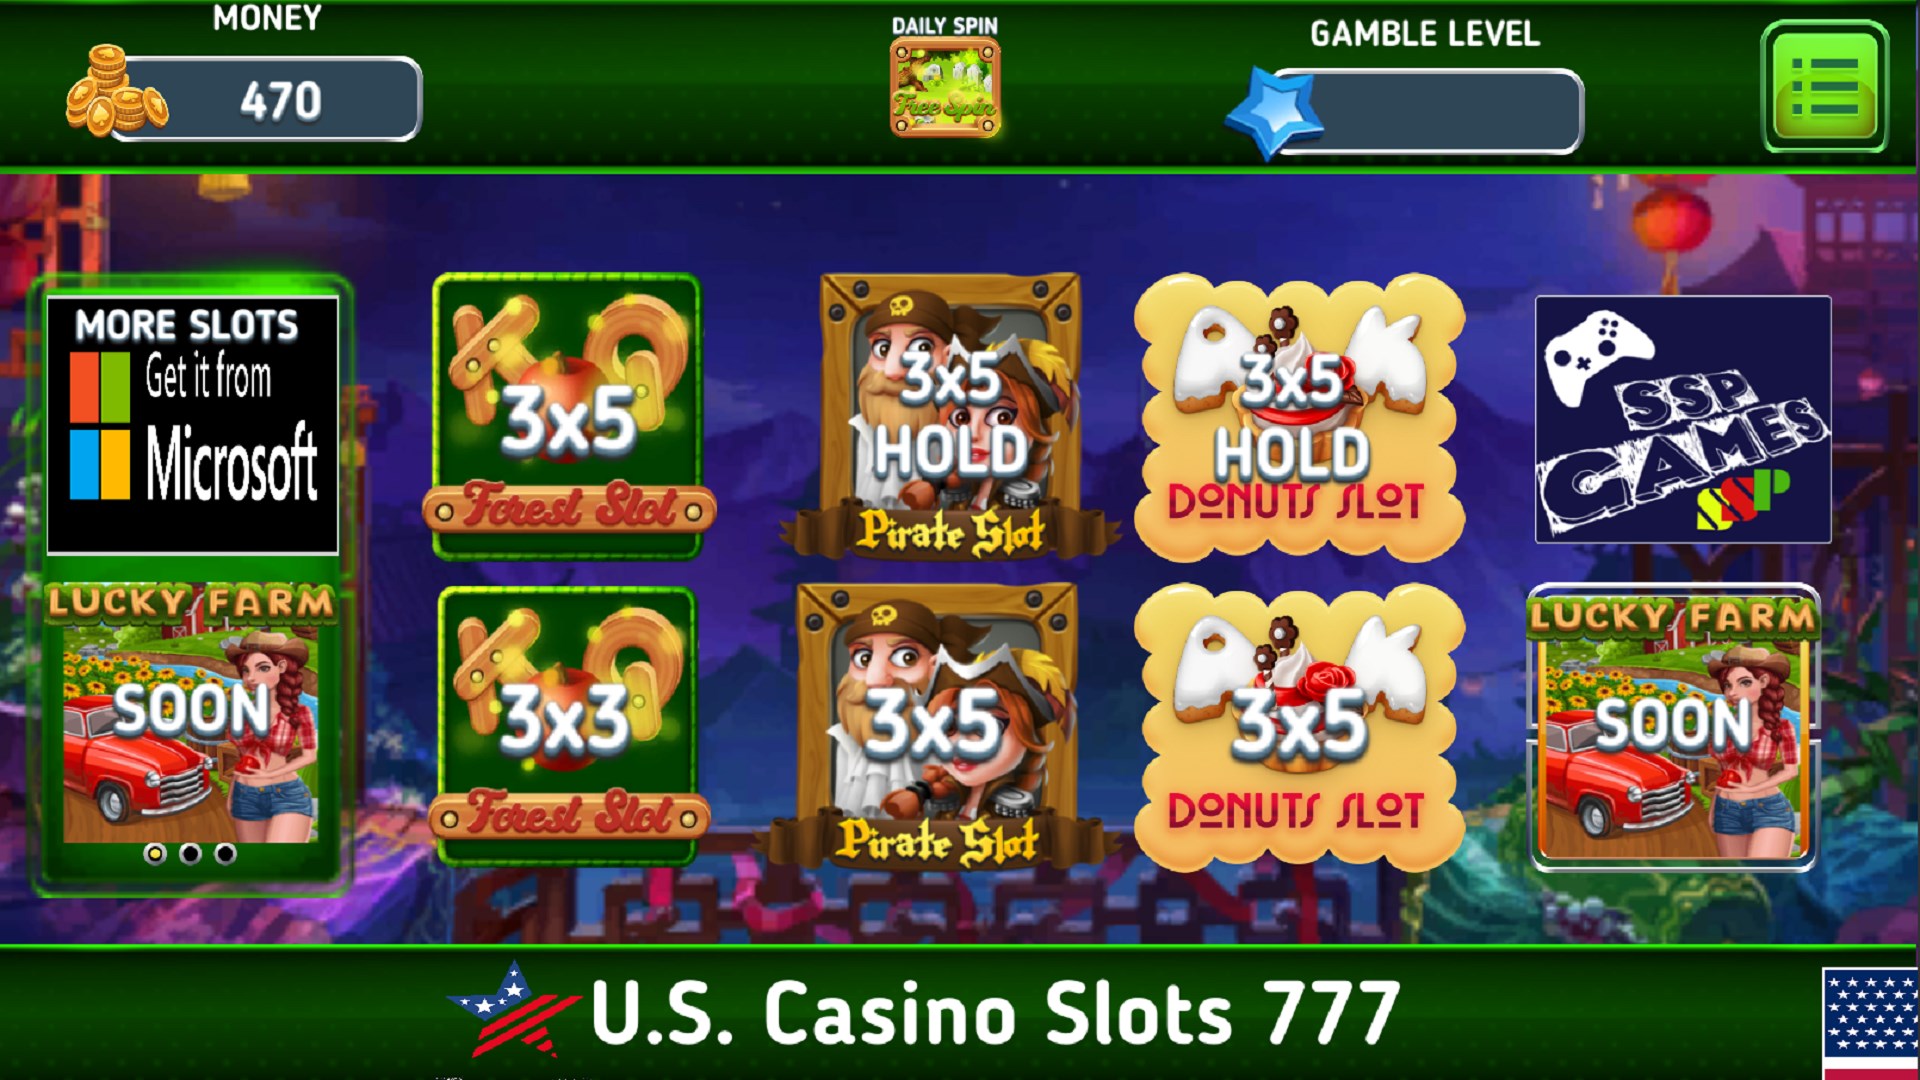 Slots of Luck: 100+ Free Casino Slots Games! Enjoy free 777 slots